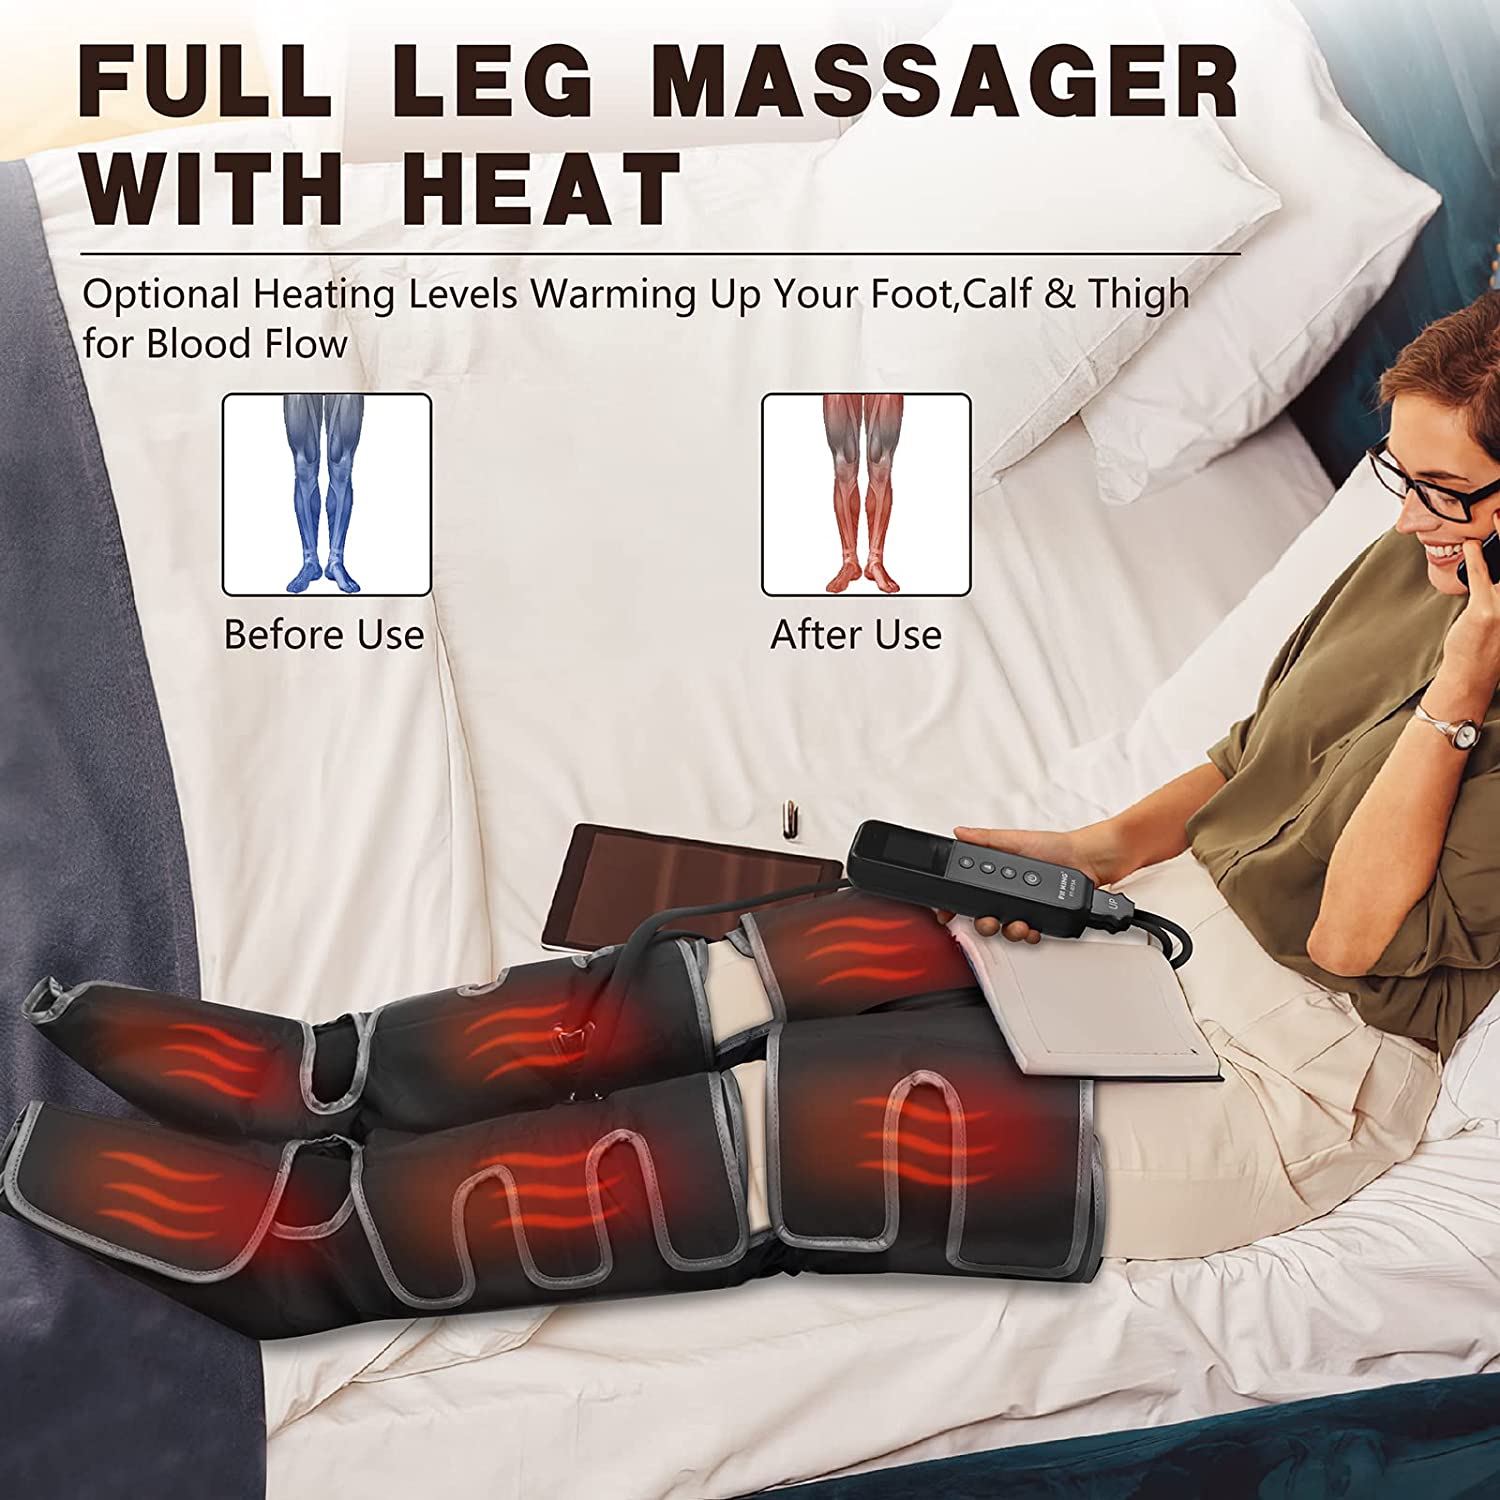 FT-075A - Full Leg Massager with Heat